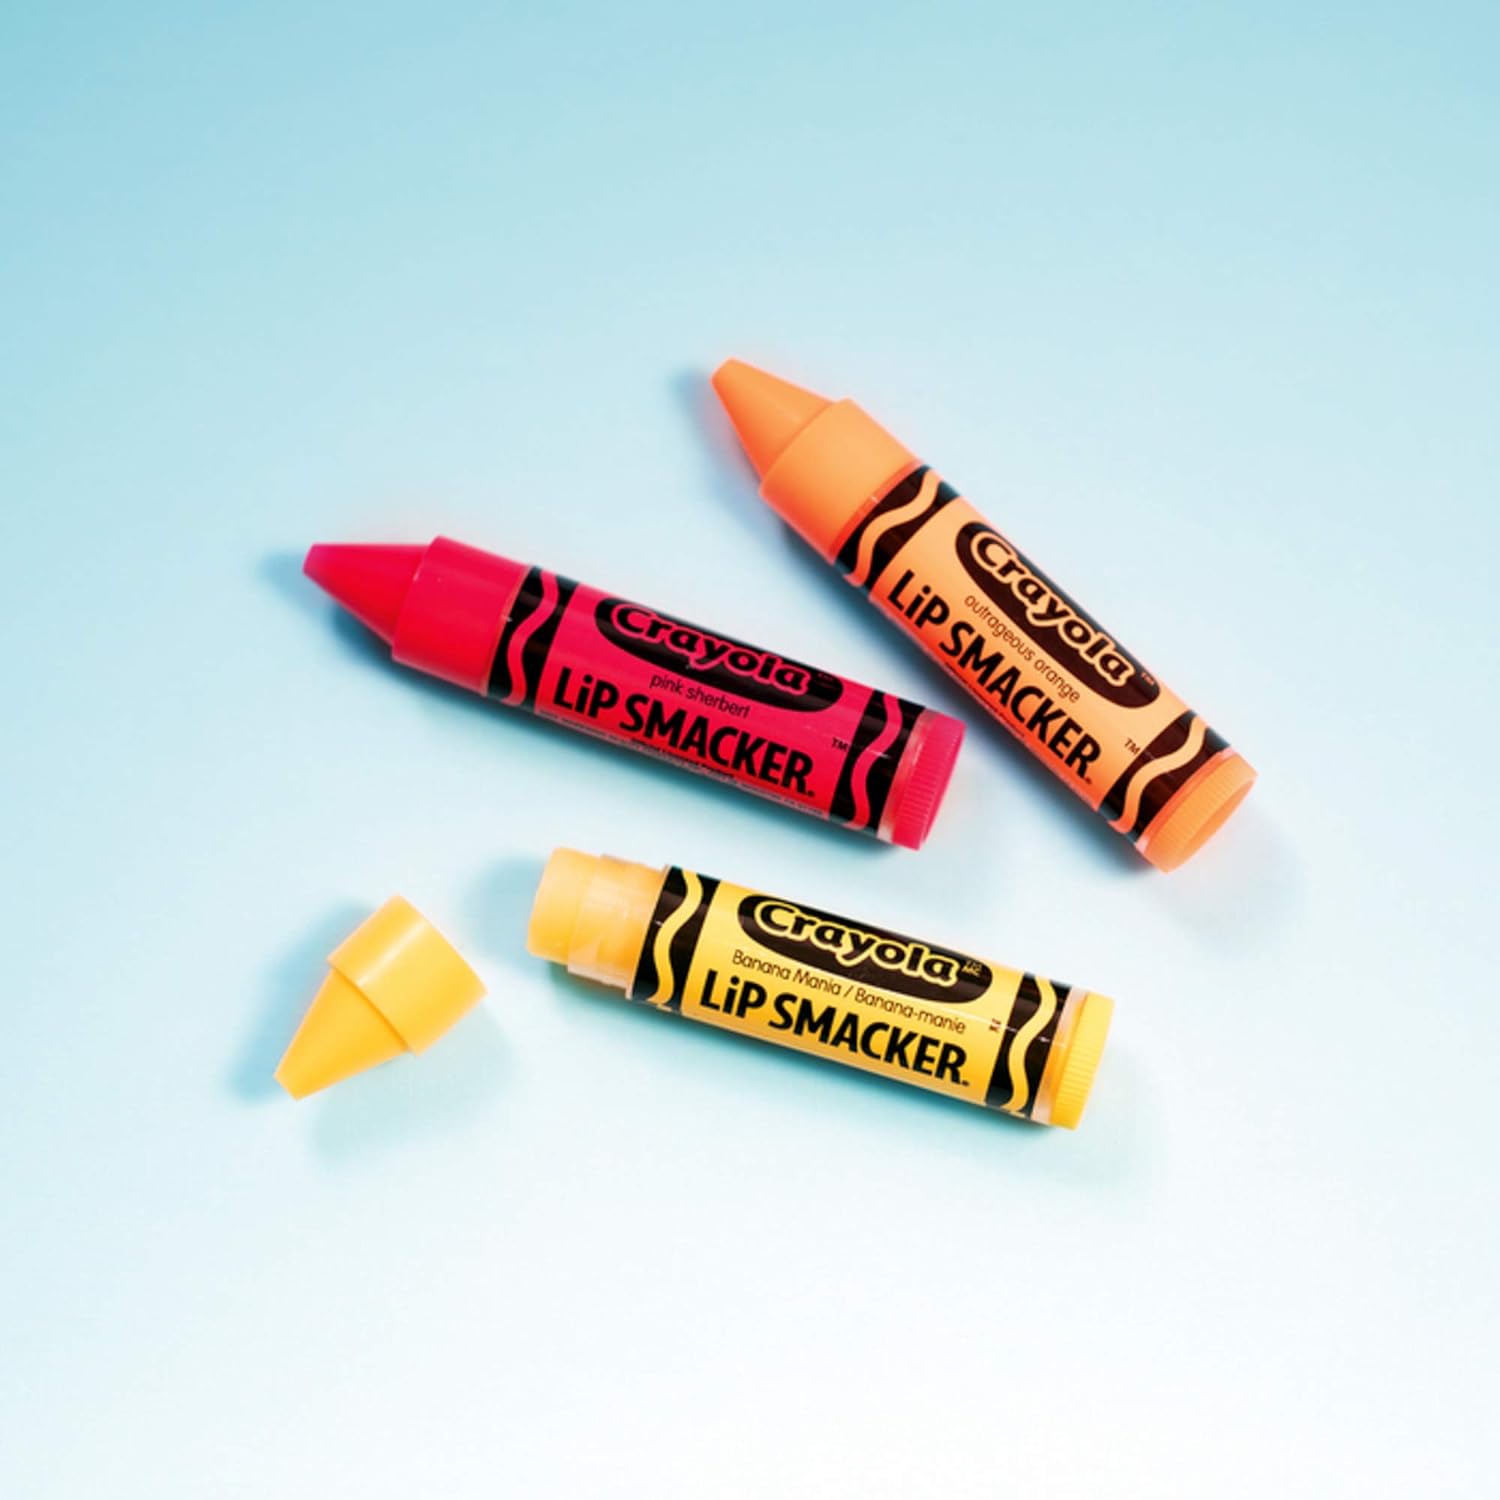 Lip Smacker Crayola Crayon Flavored Lip Balm Trio 3-Pack, Banana, Sherbert, Orange, Clear Matte, For Kids, Women, Men : Beauty & Personal Care